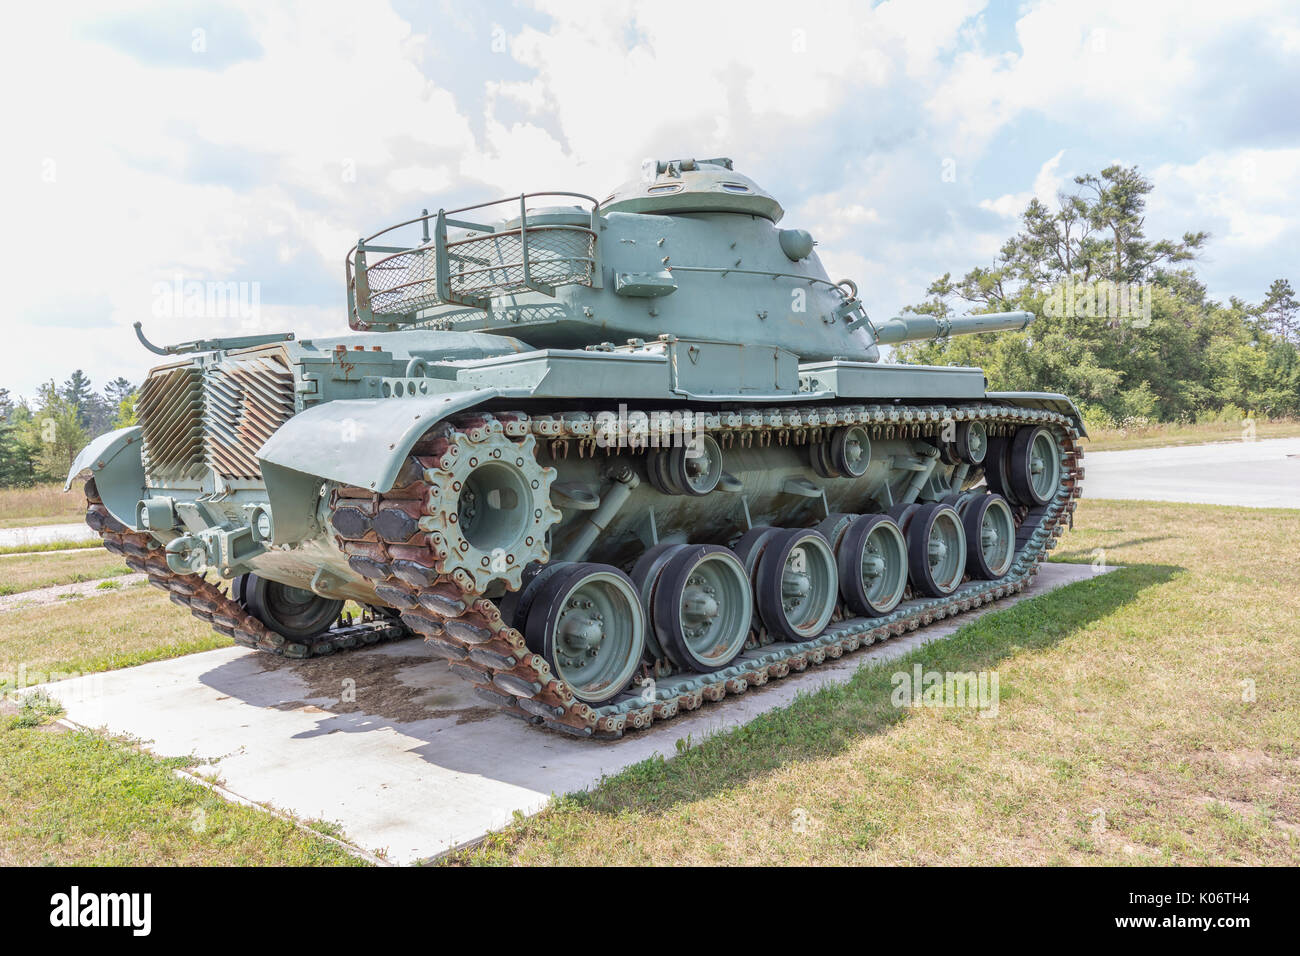 us main battle tank of wwii